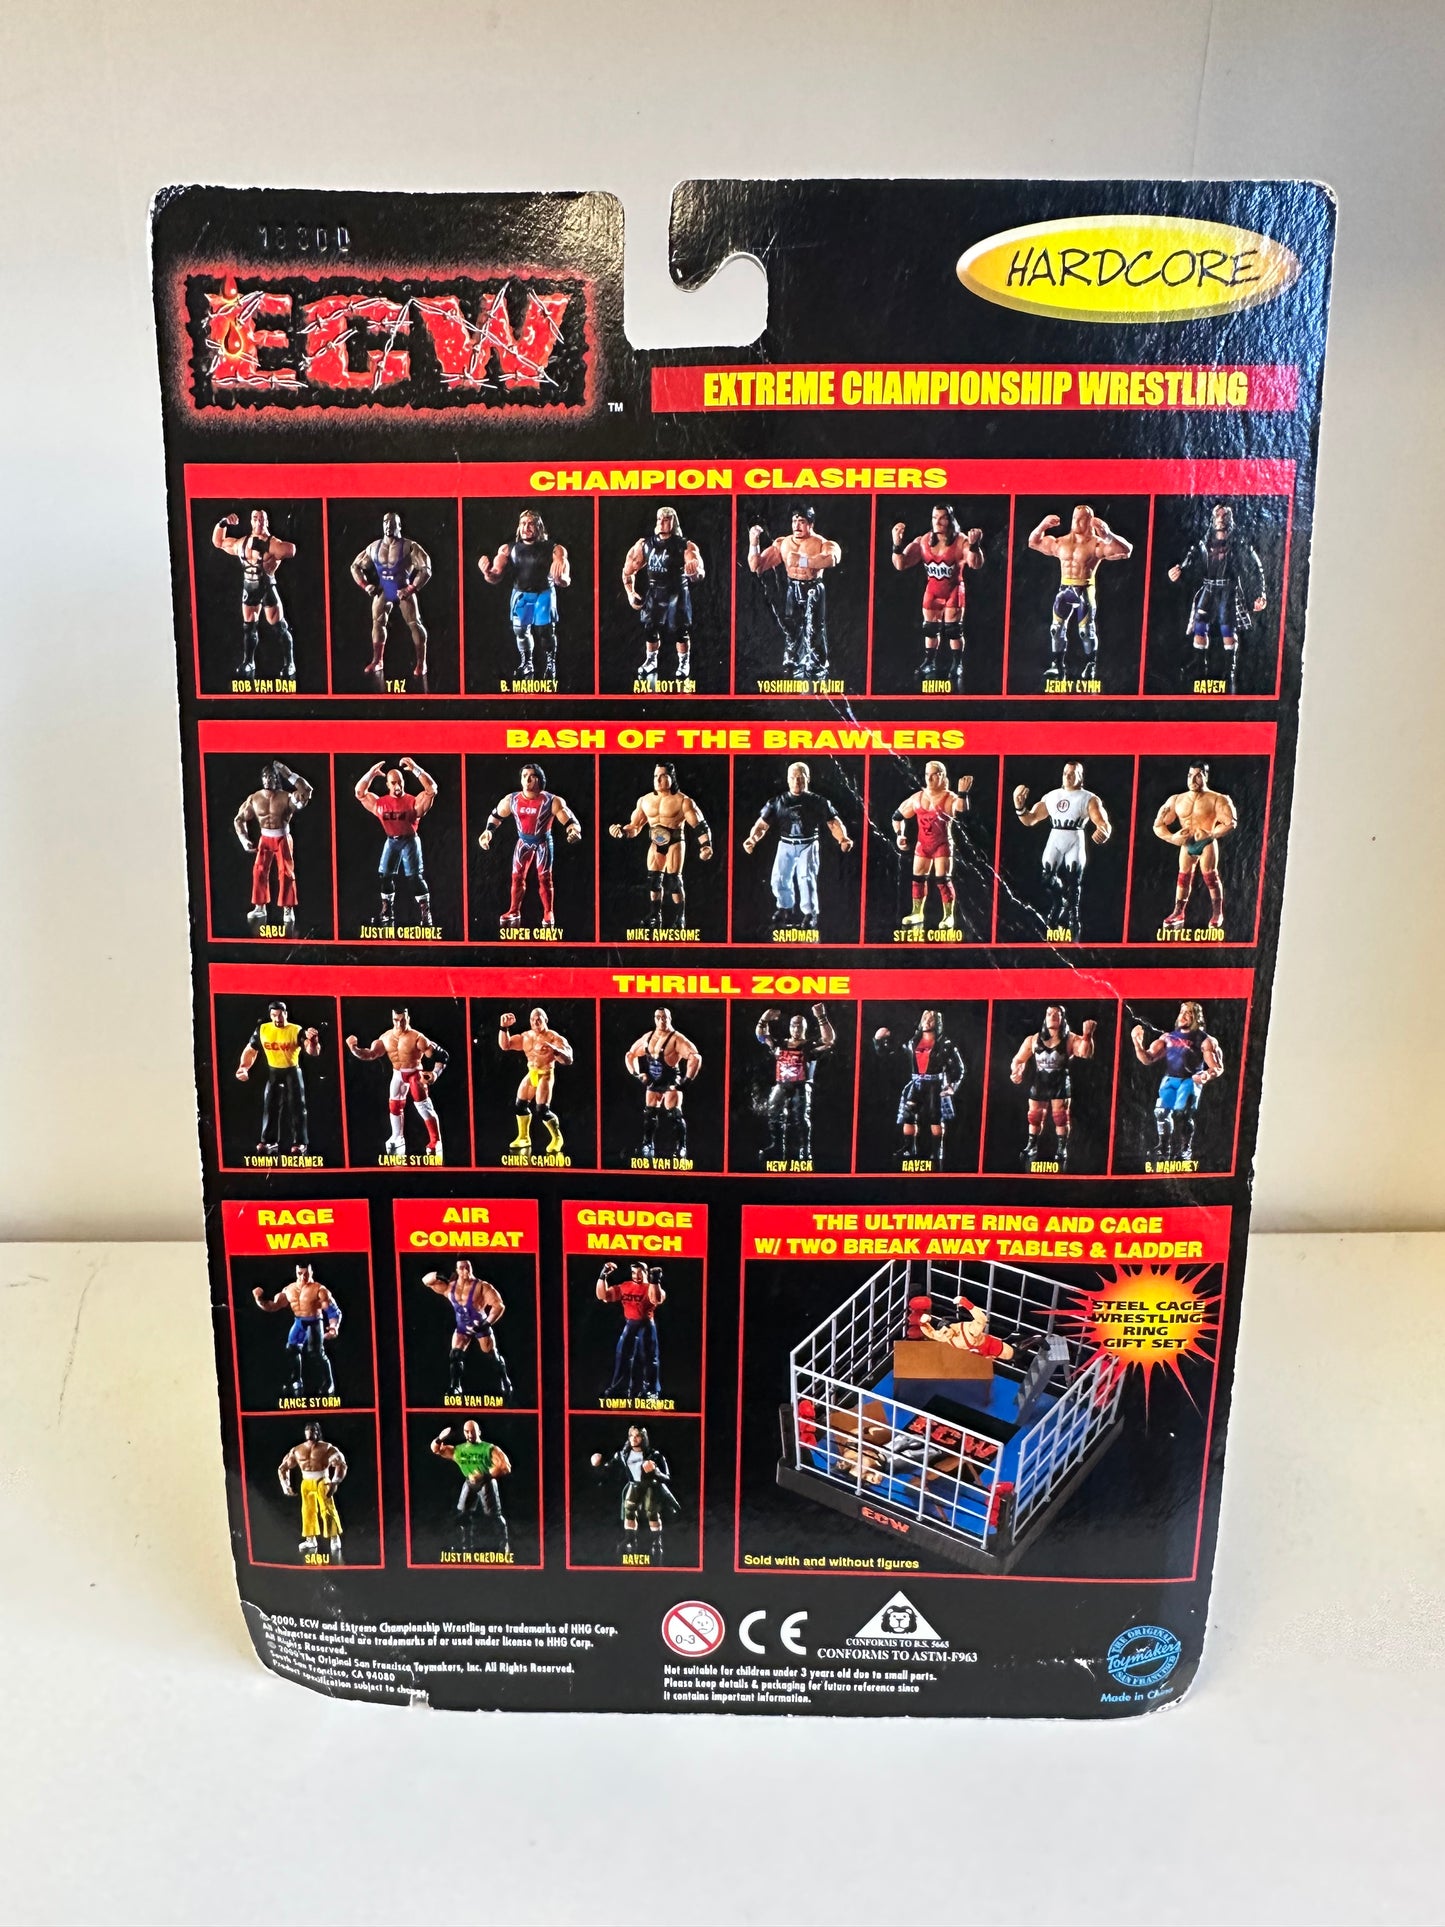 ECW Champion Clashers Rhino MOC Wrestling Action Figure Toy WWE WWF